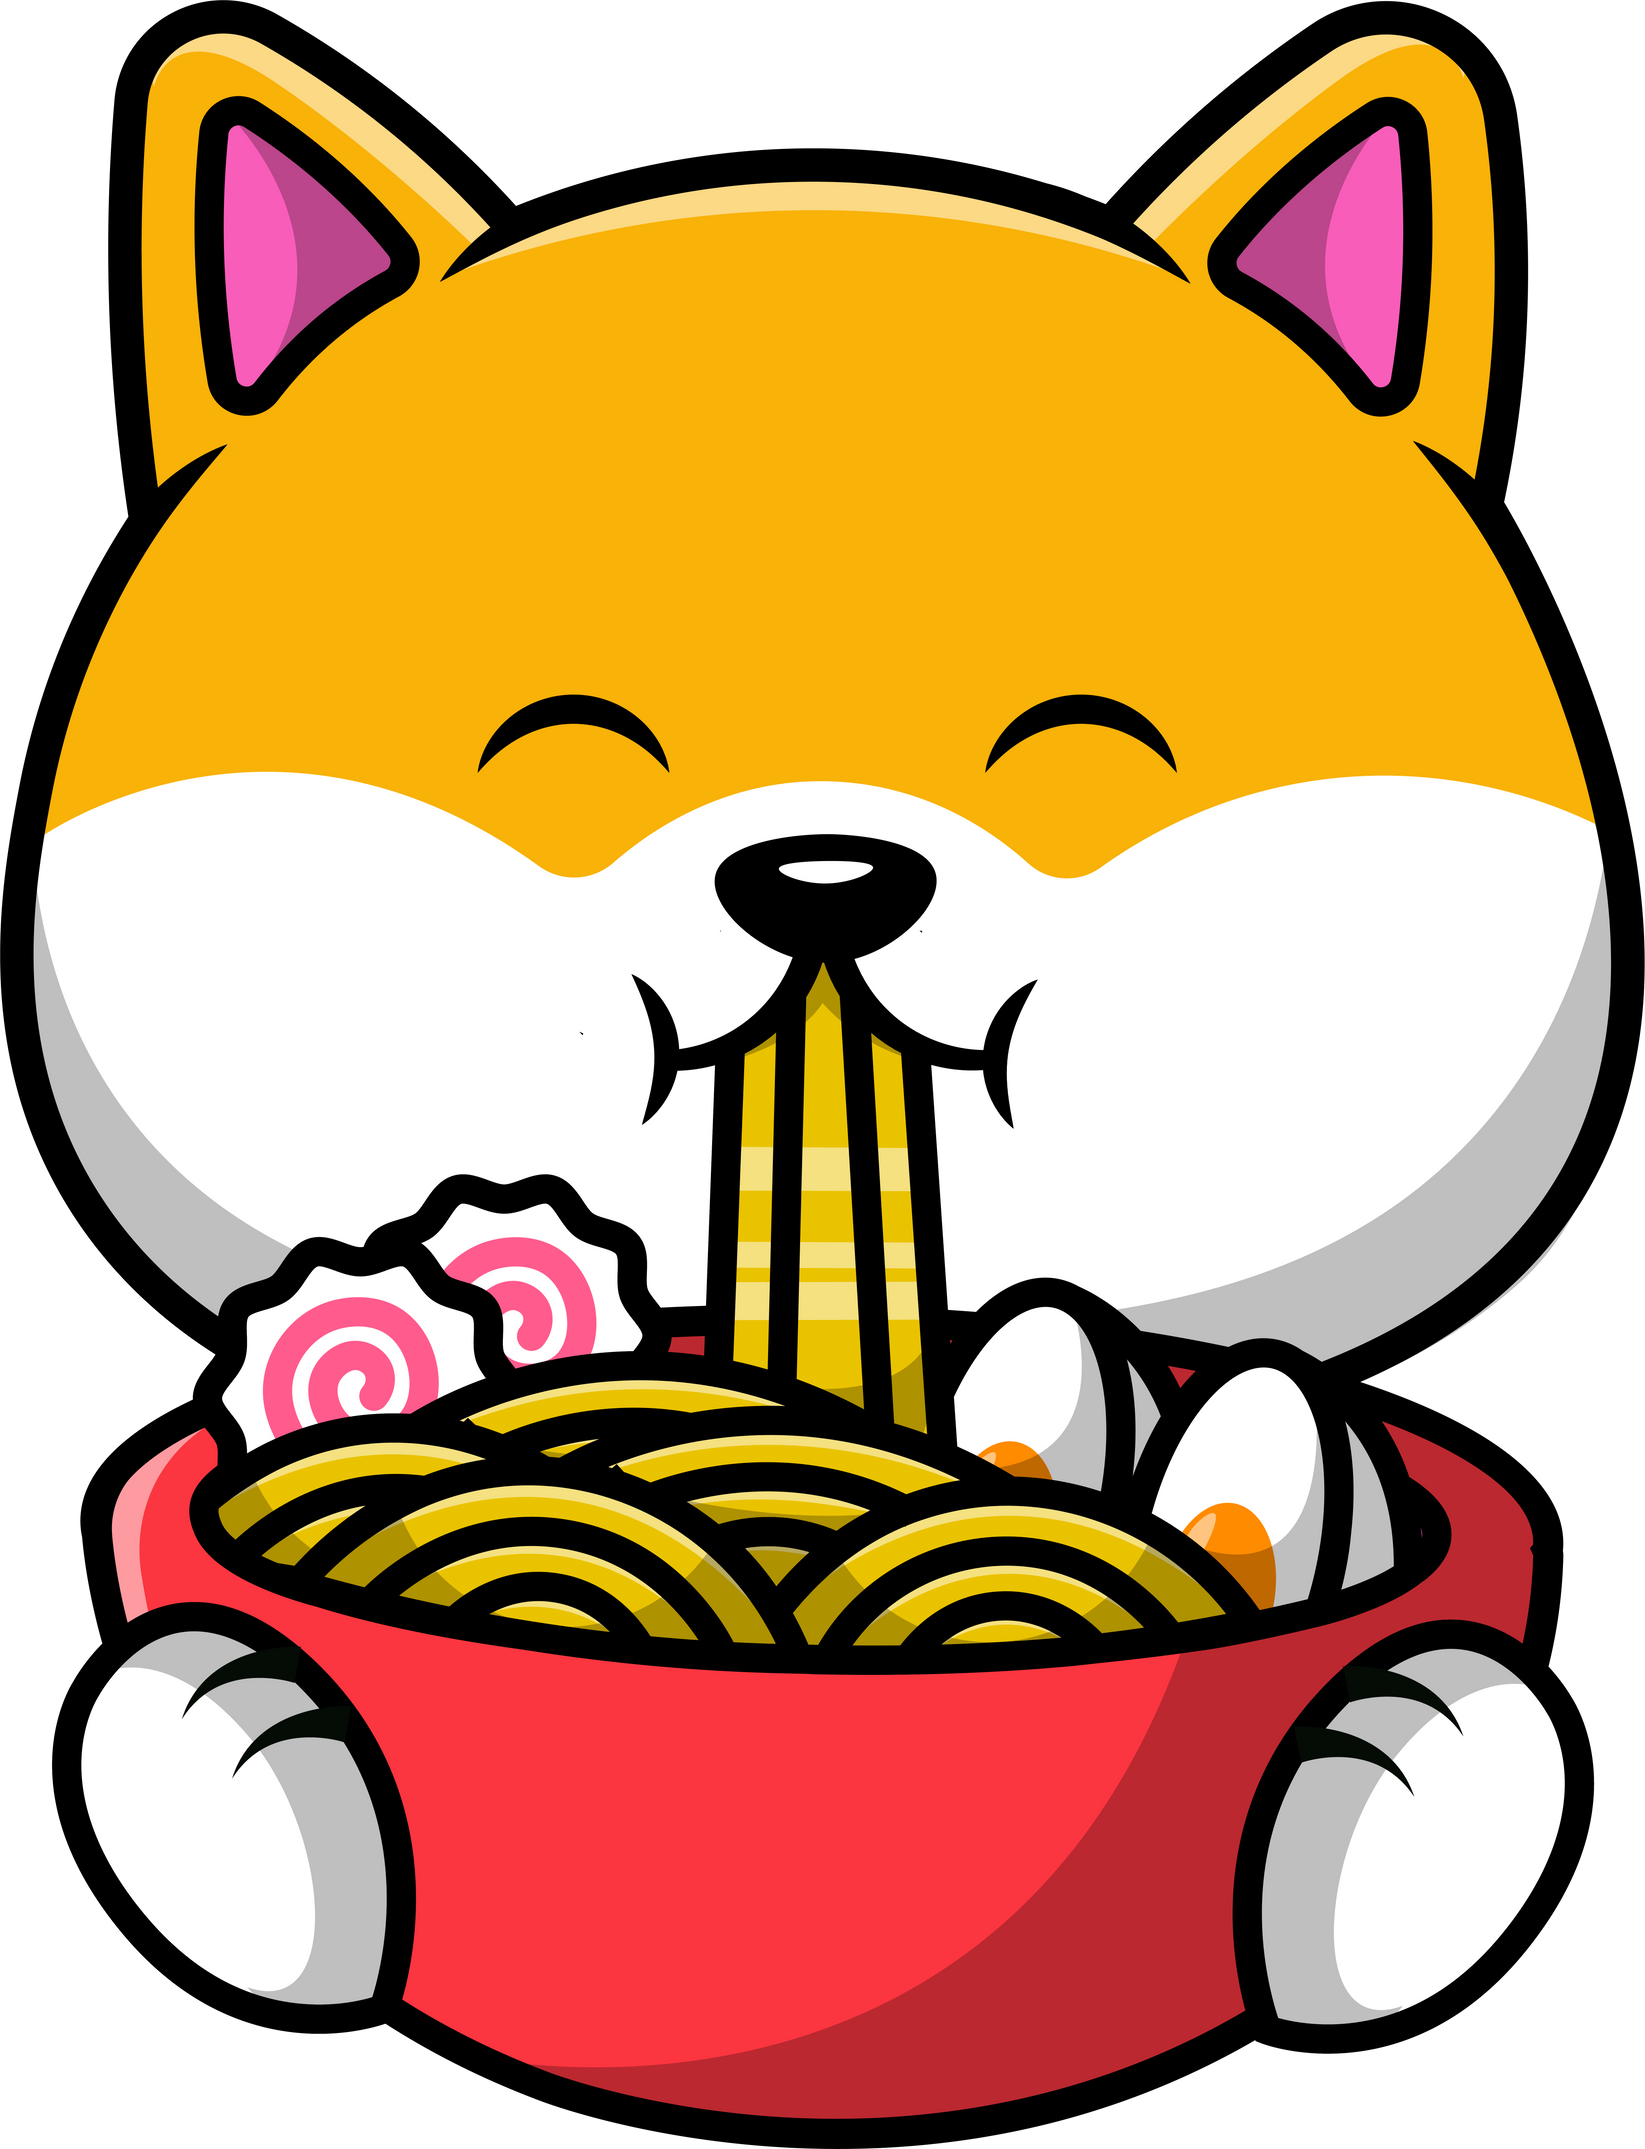 Cute Shiba Inu Eating Ramen Noodle Cartoon Vector Icon Illus